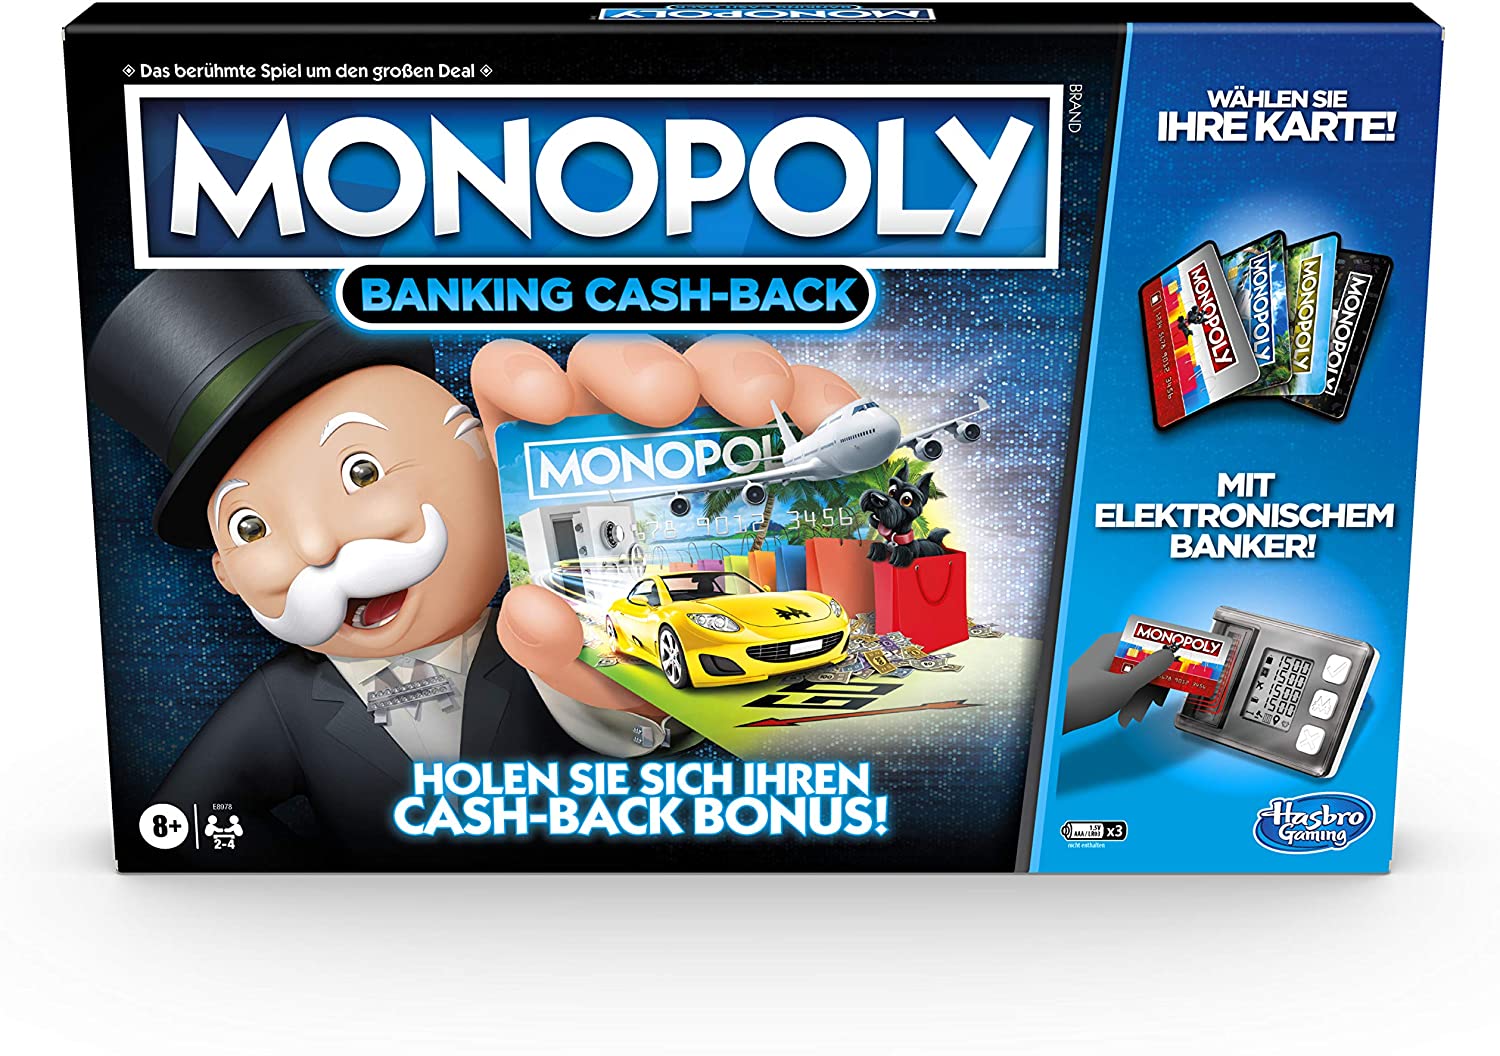 Monopoly Banking Cash-Back Brettspiel, Kartenleser Cash-Back Bonus bargeldloses